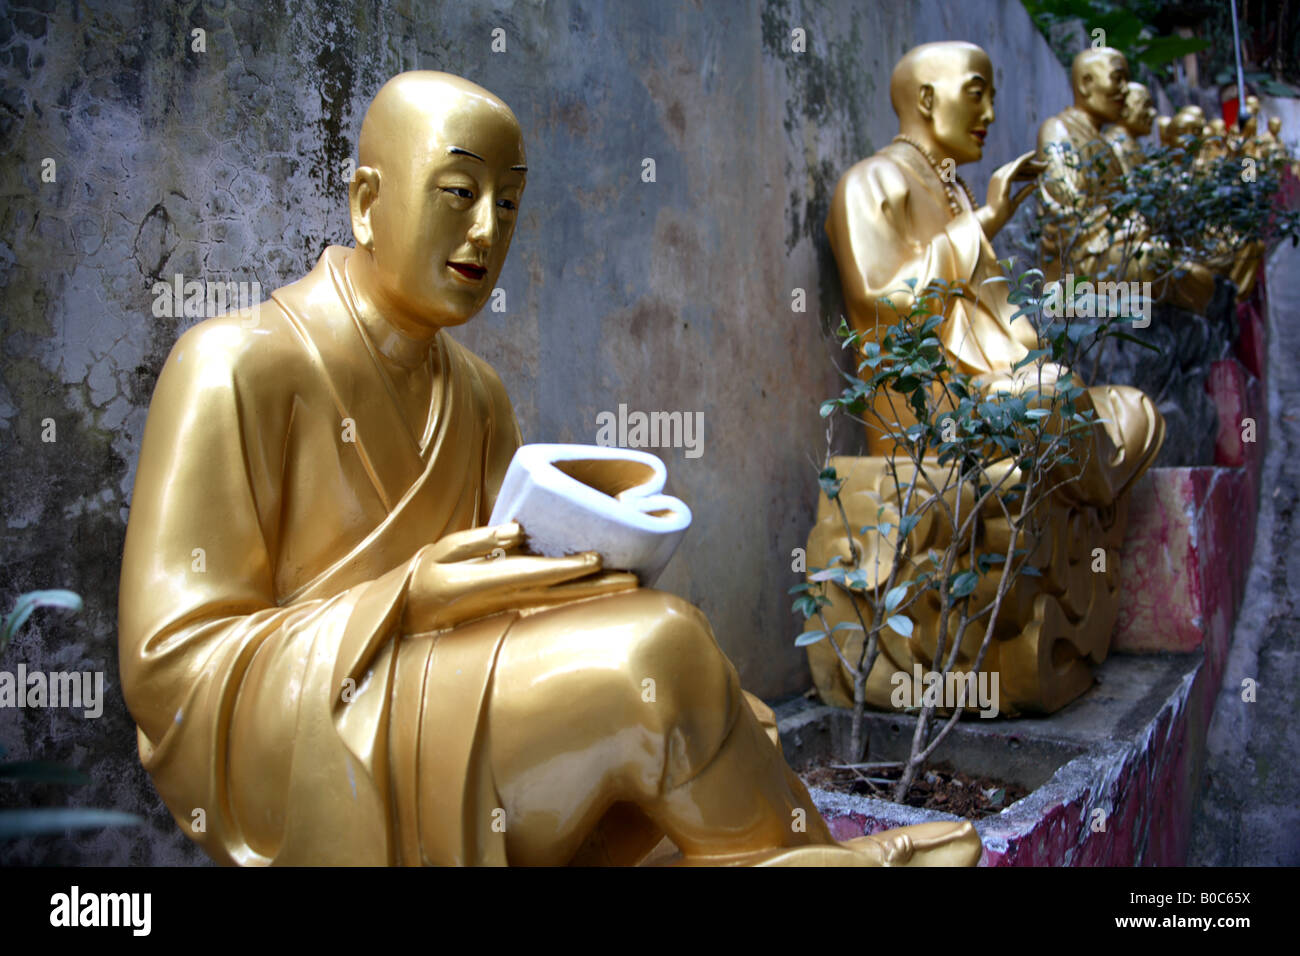 Statues bouddhistes sur le chemin à 10 000 bouddhas monastery Sha Tin Hong Kong Chine Banque D'Images